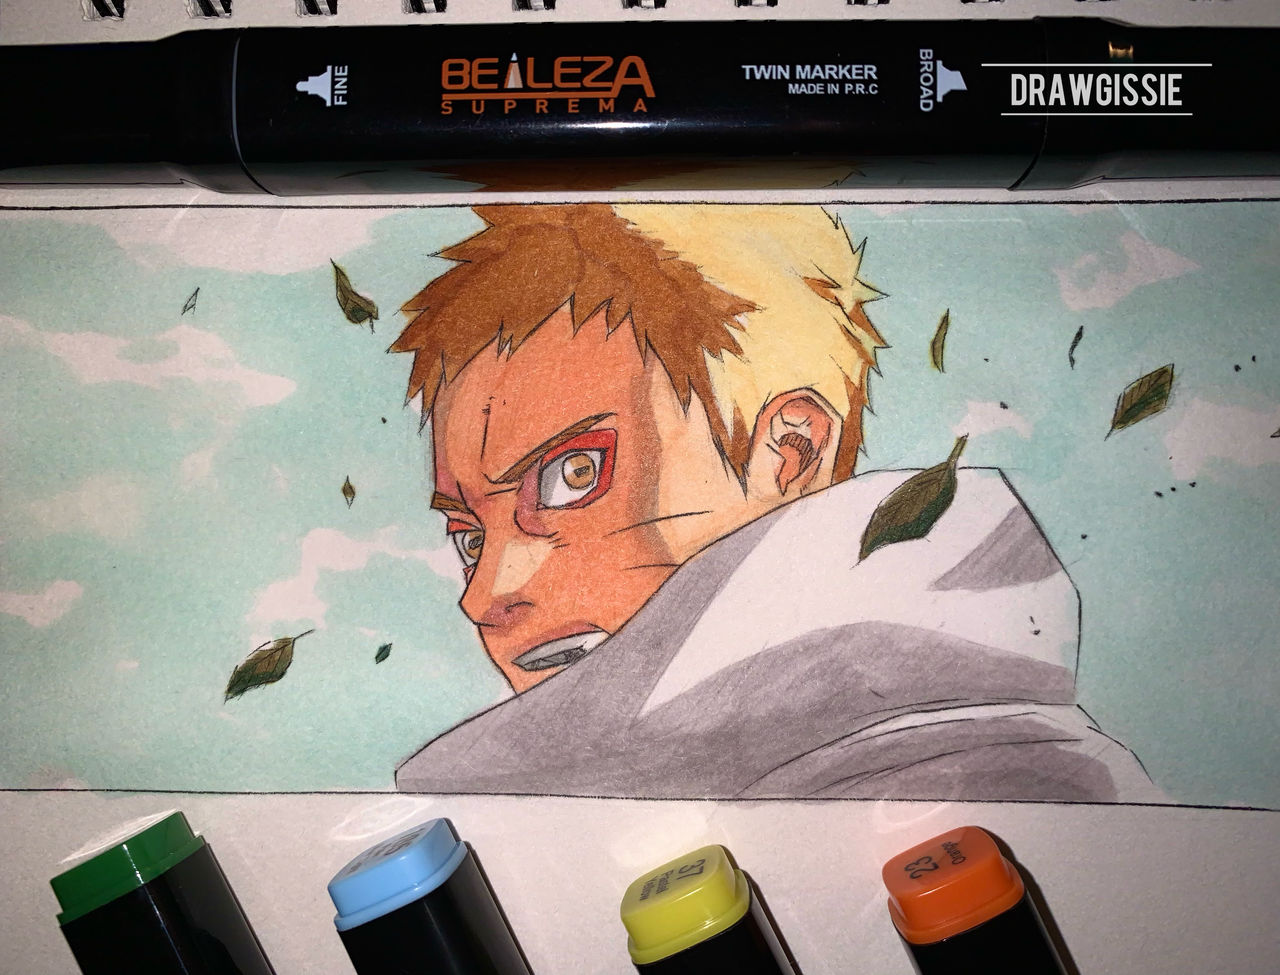 Naruto Drawing: Naruto Uzumaki (Sage Mode) by ArtDragon2199 on DeviantArt